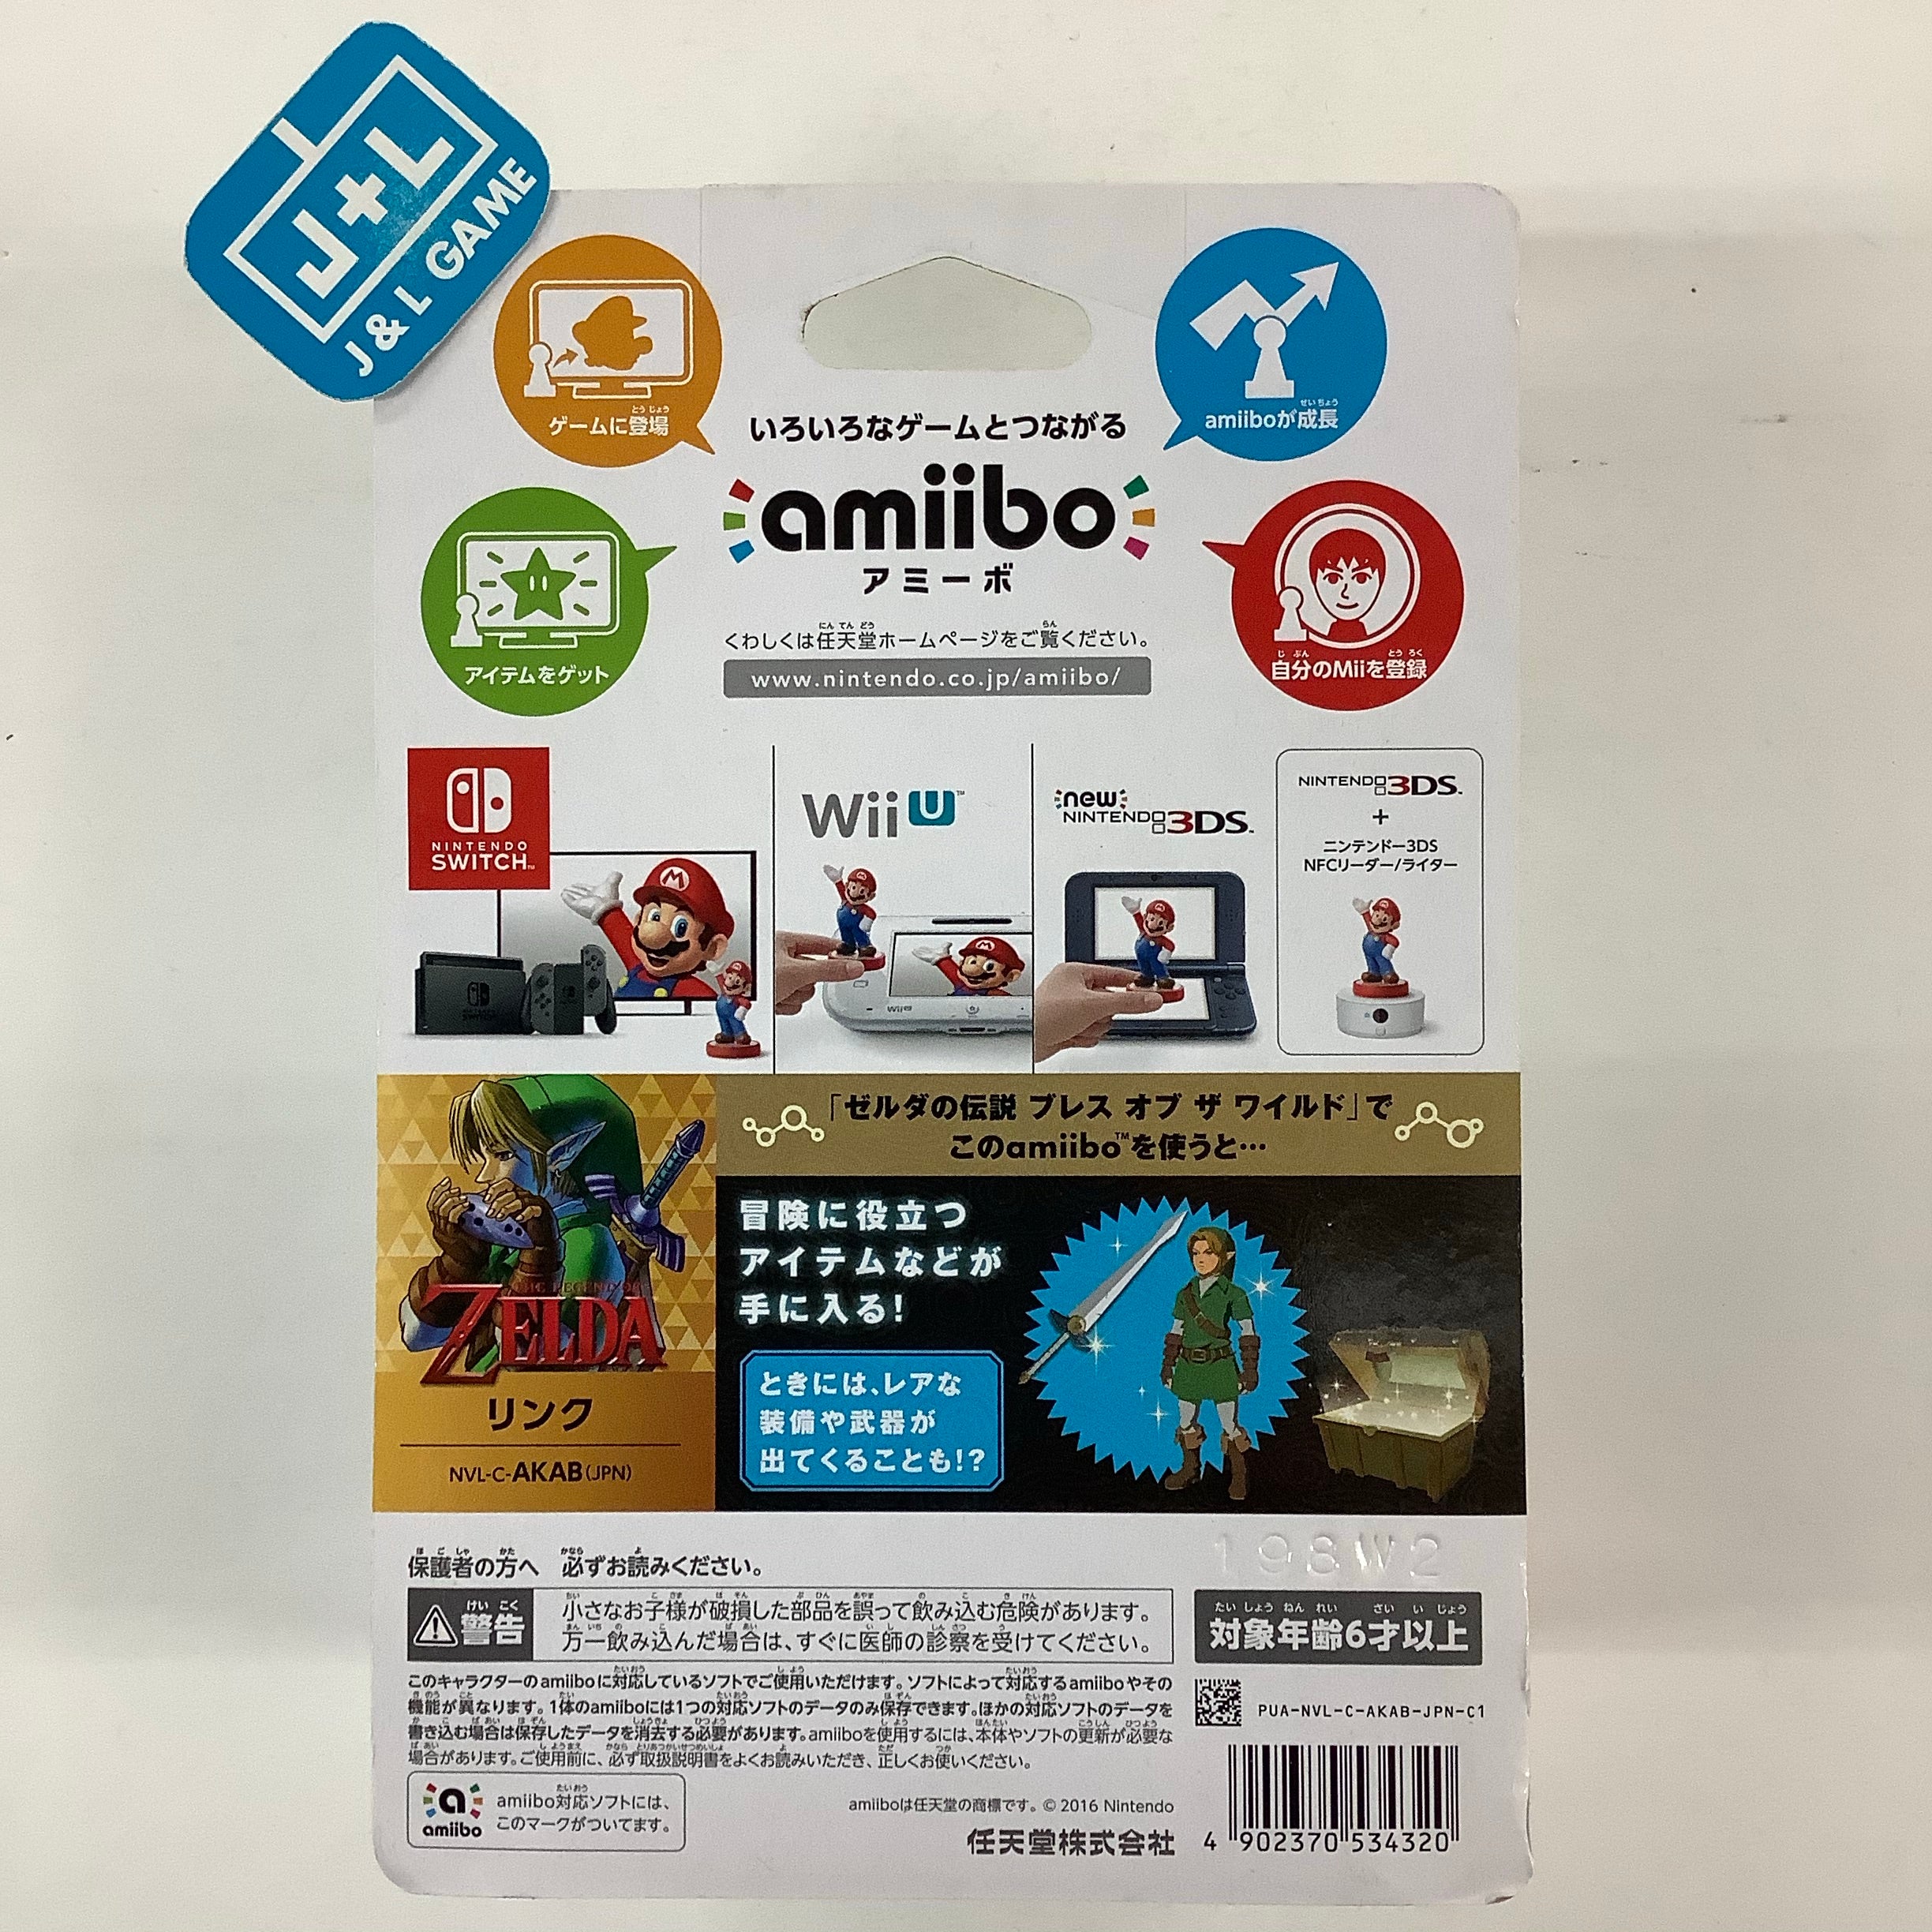 Link (The Legend of Zelda: Ocarina of Time) - Nintendo Amiibo (Japanese Import) Amiibo Nintendo   